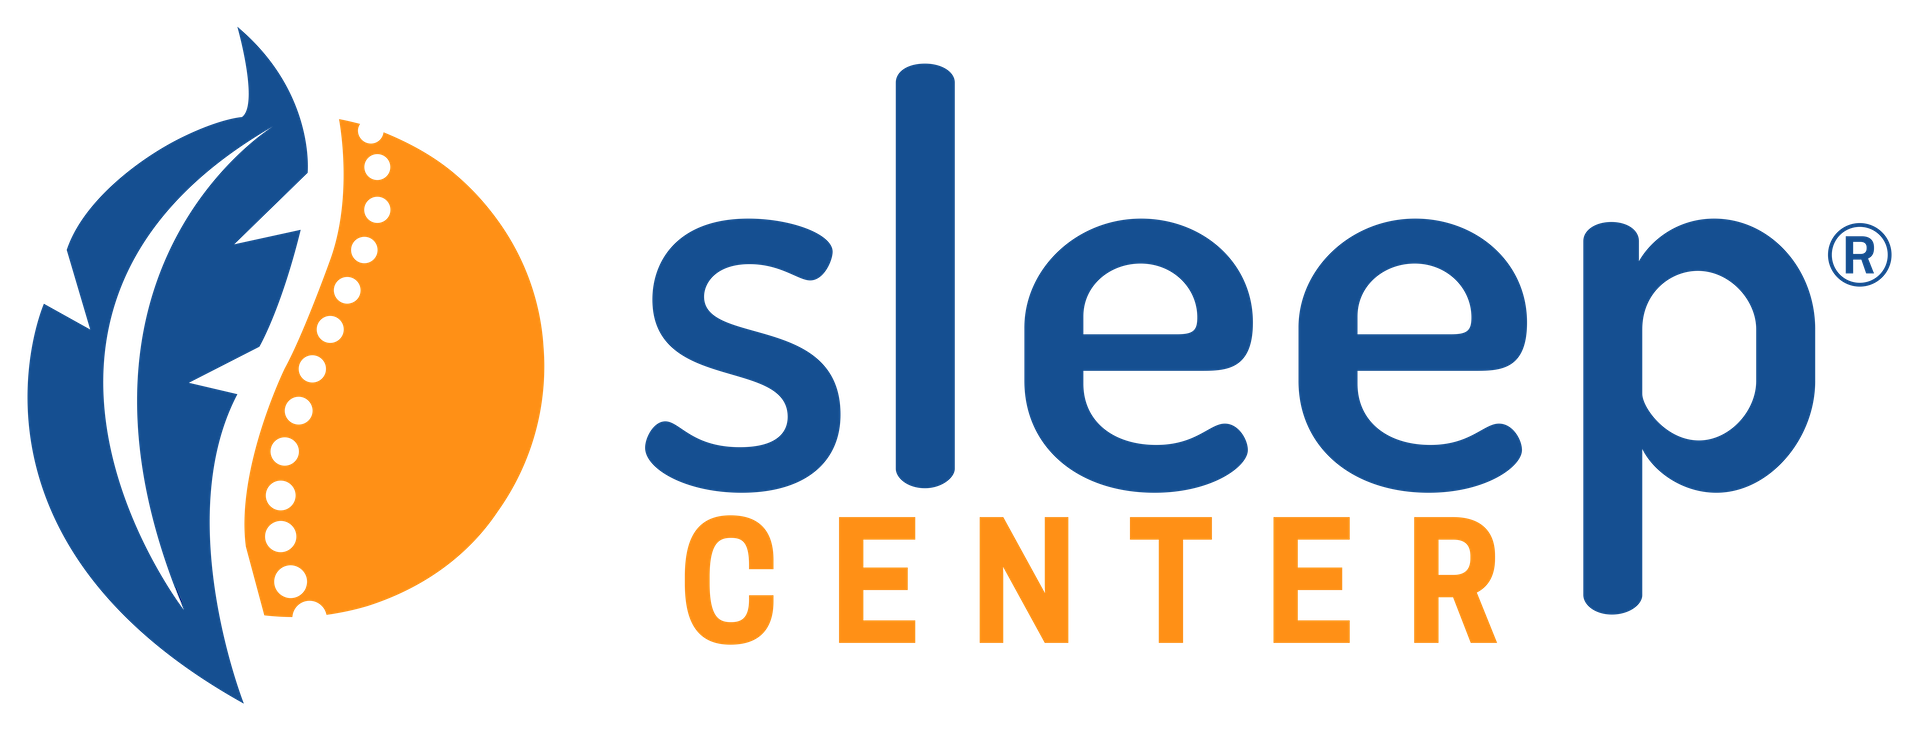 sleepcenter Logo